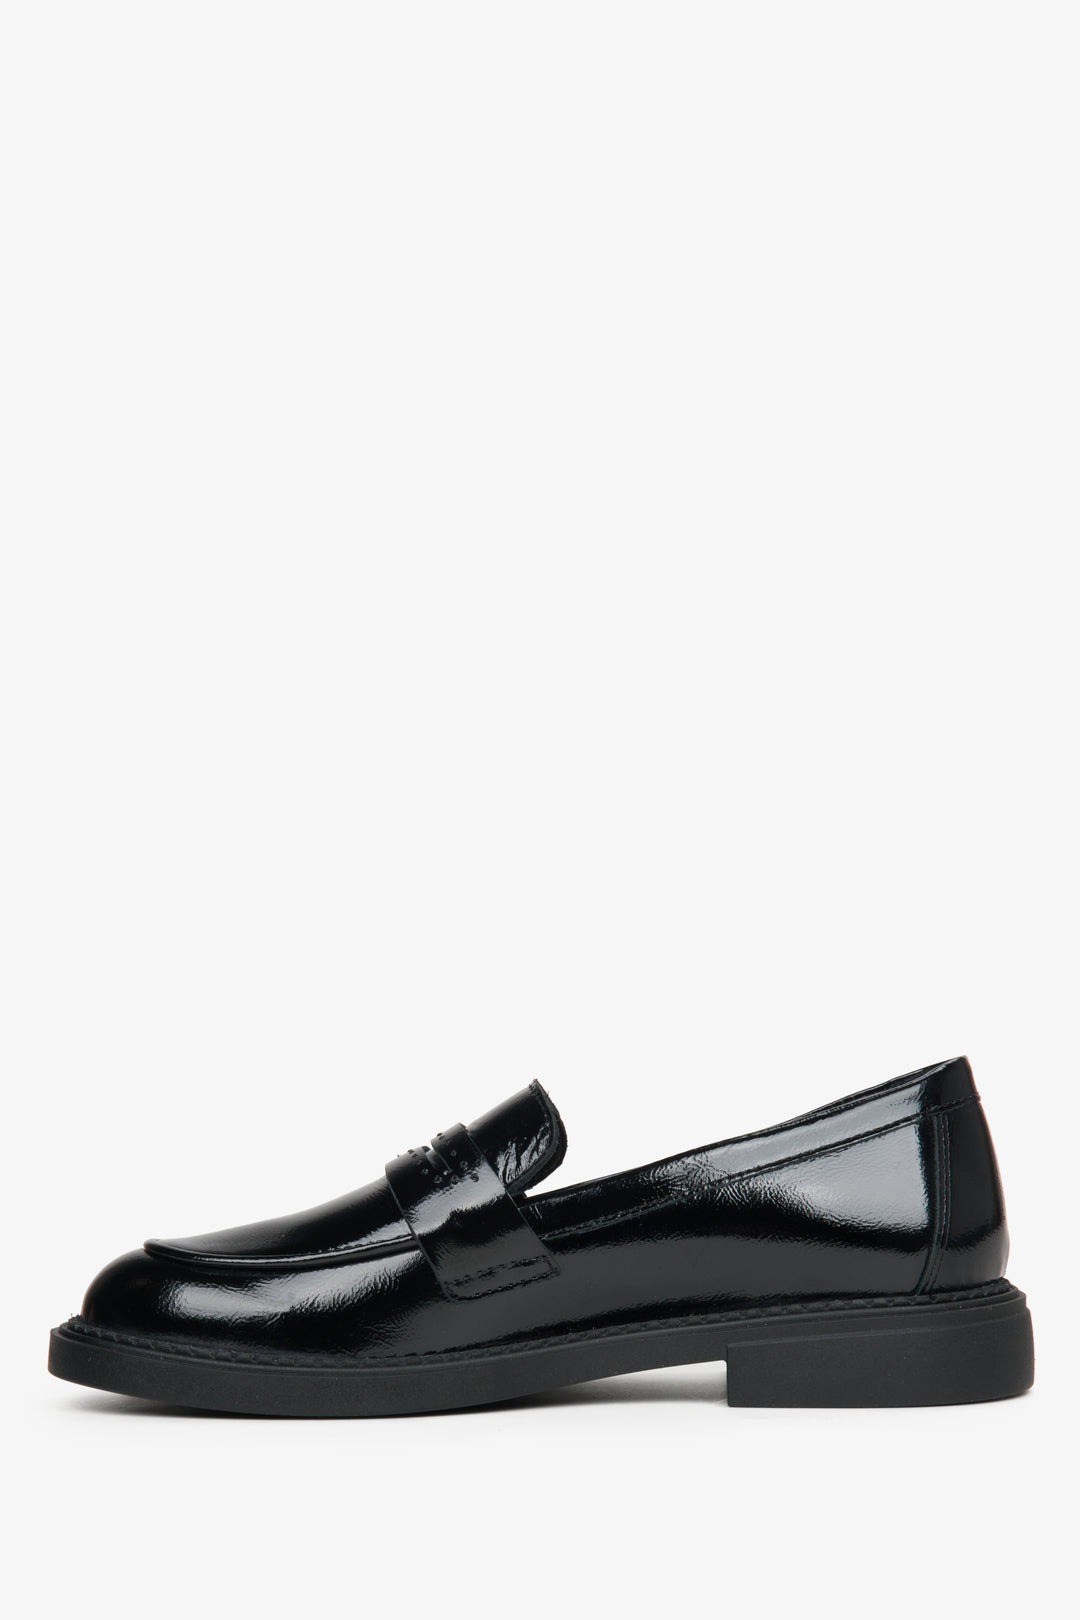 Elegant women's black loafers for spring by Estro - shoe profile.